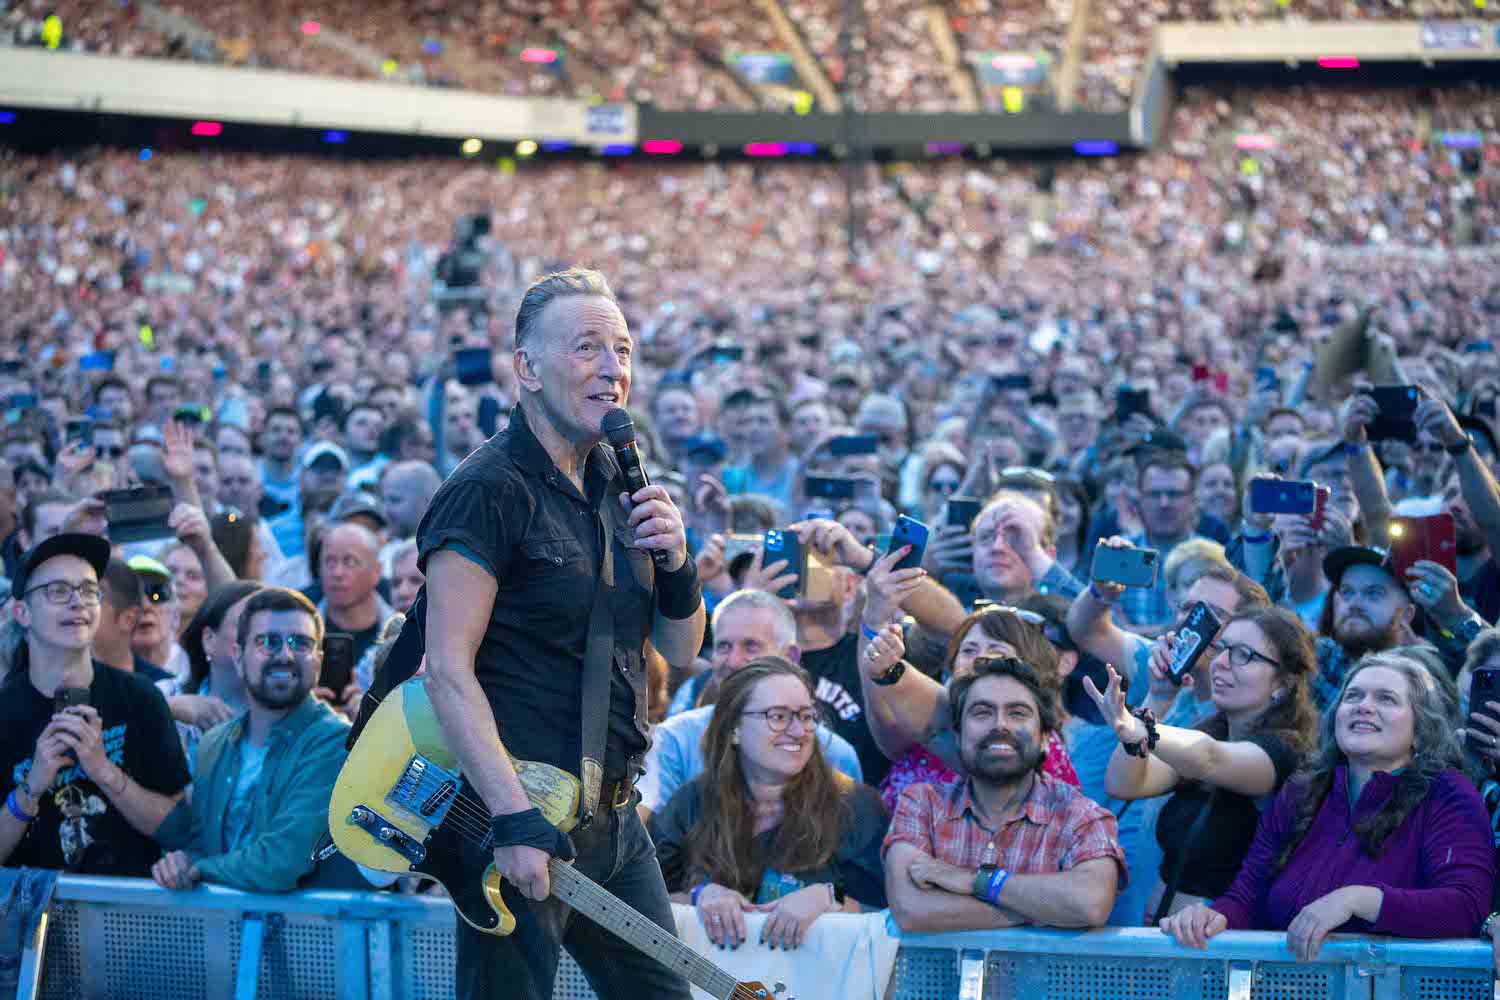 Bruce Springsteen & E Street Band at BT Murrayfield Stadium, Edinburgh, Scotland on May 30, 2023.